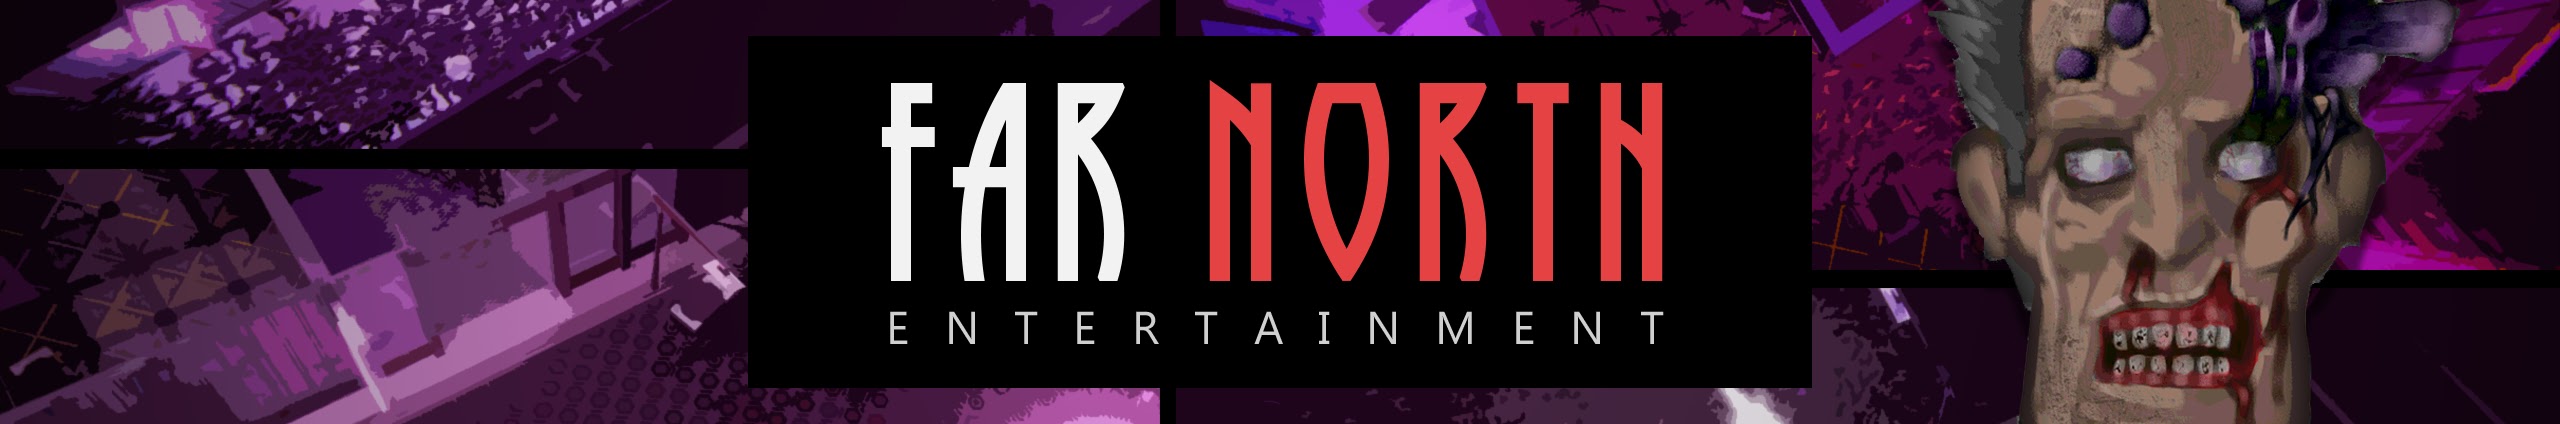 Far North Entertainment